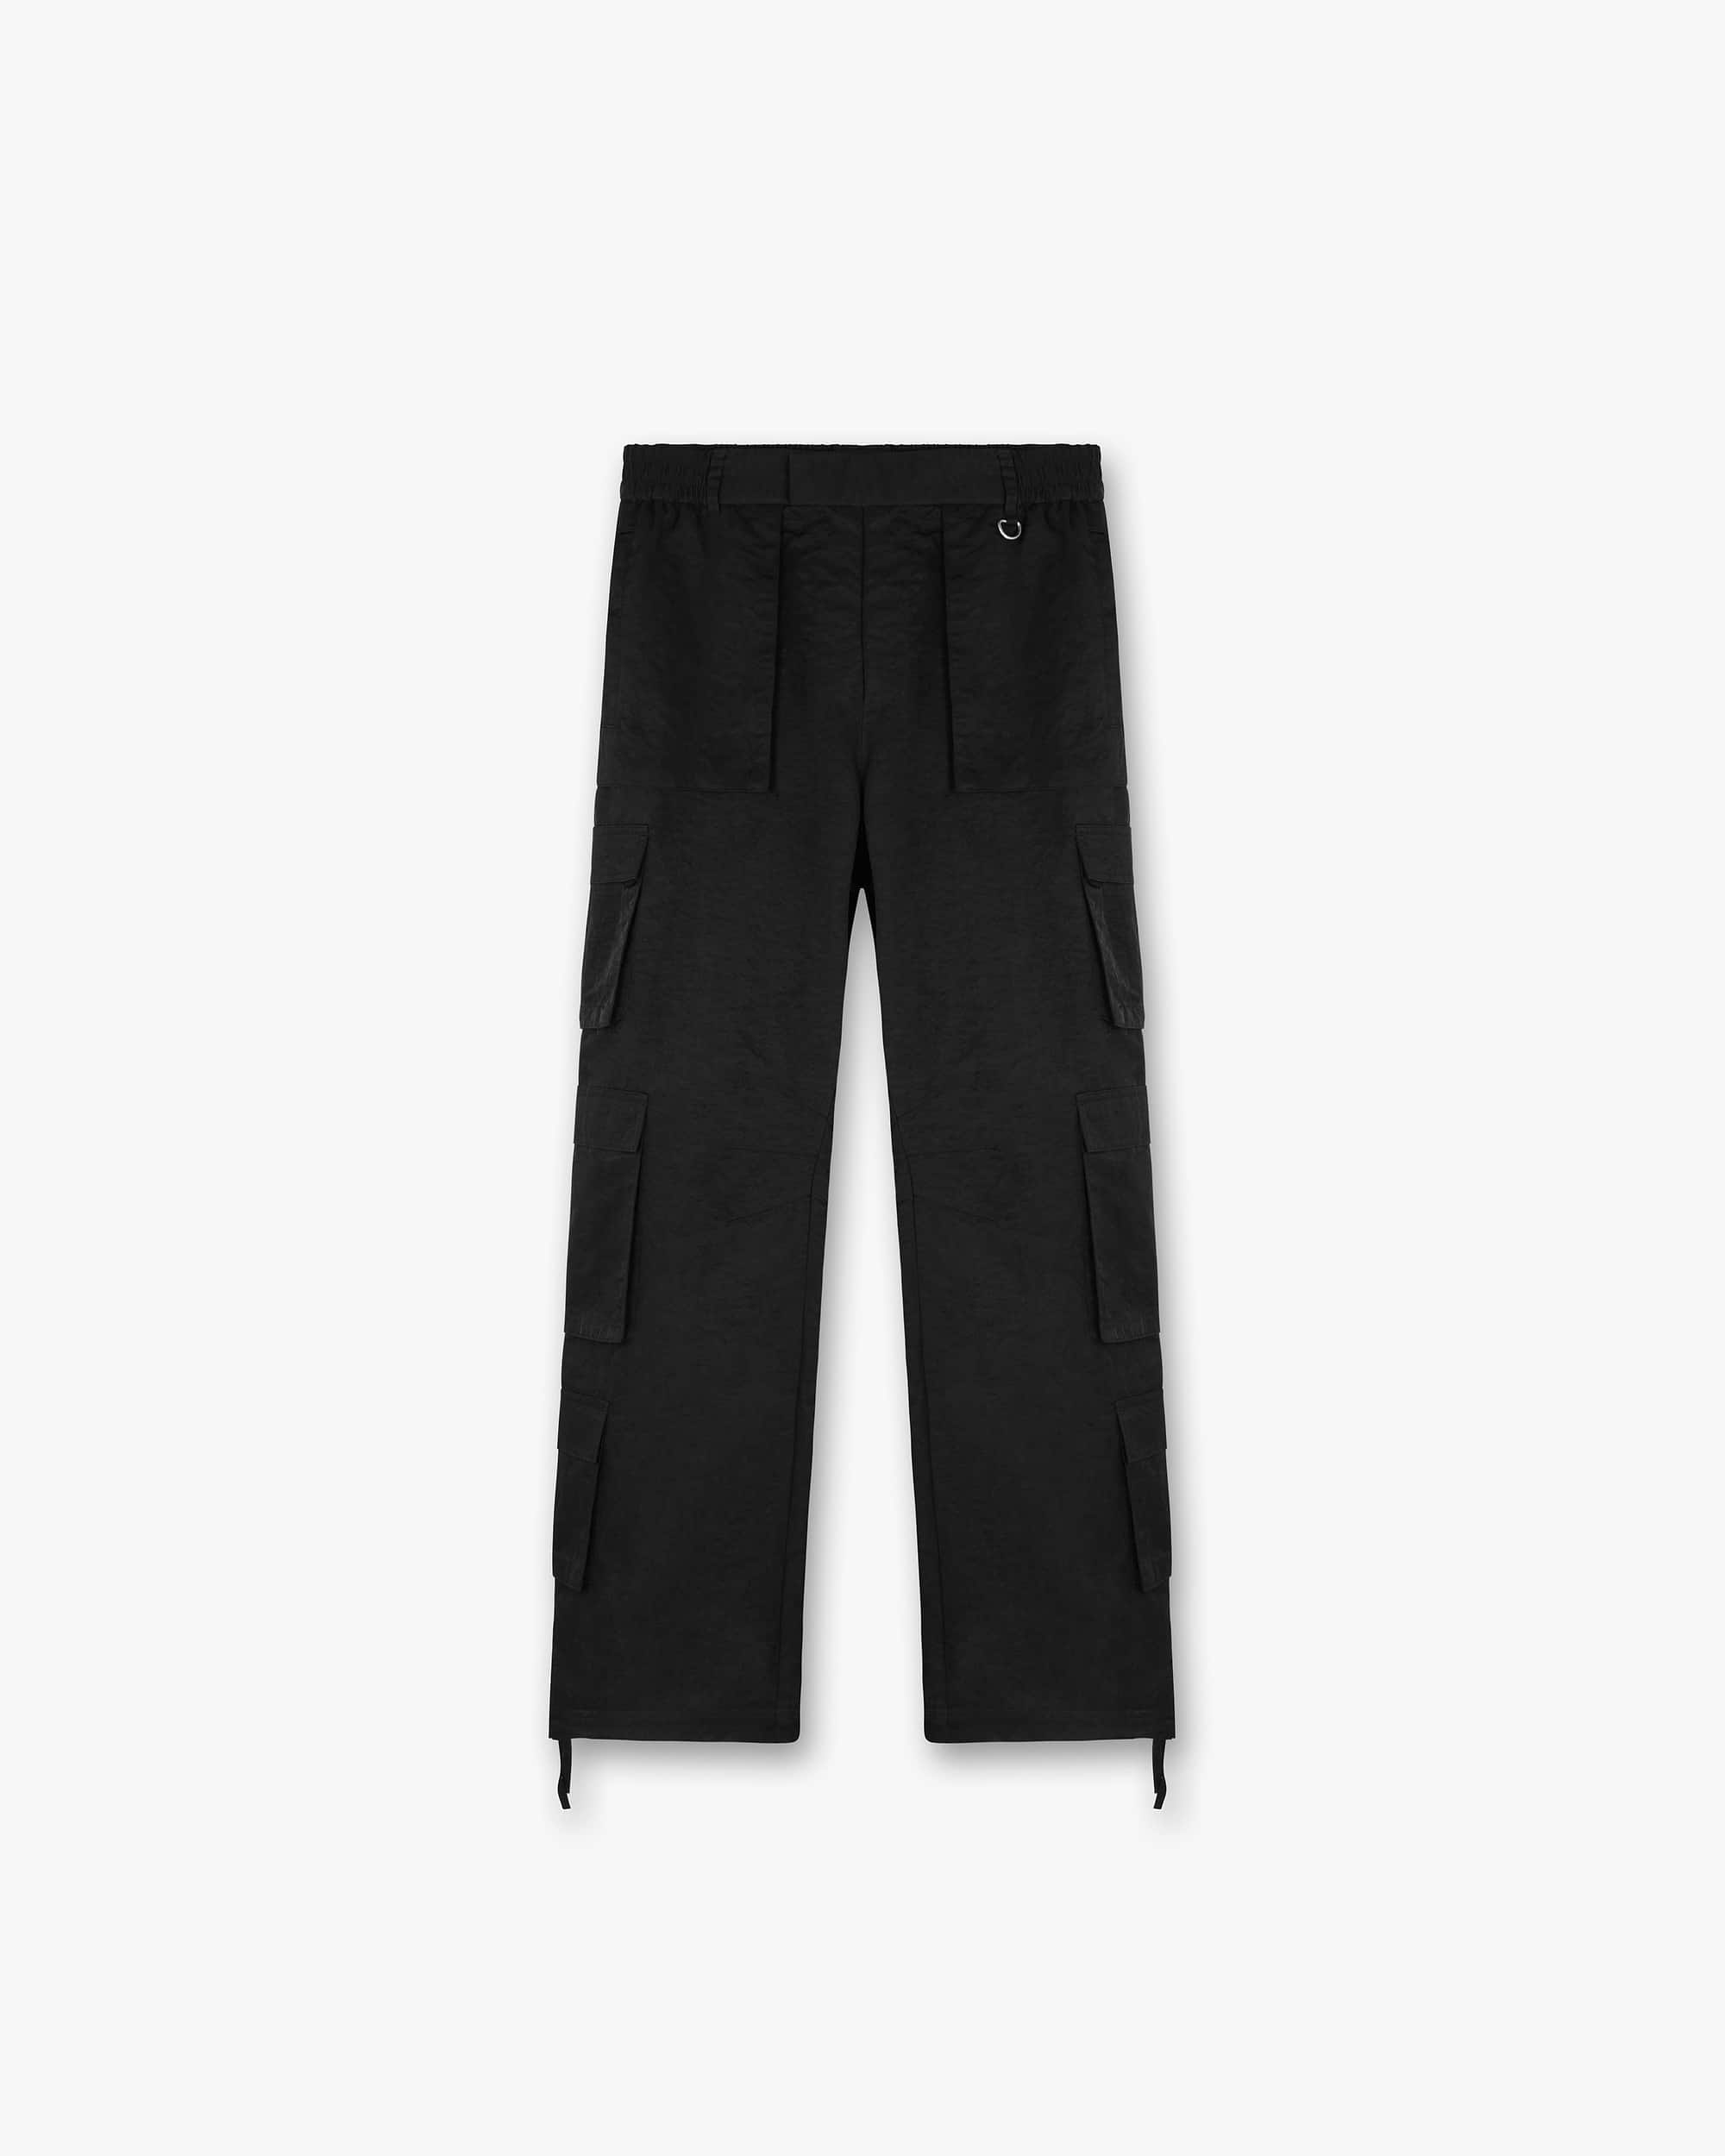 For The Streets Nylon Cargo Pants - Black